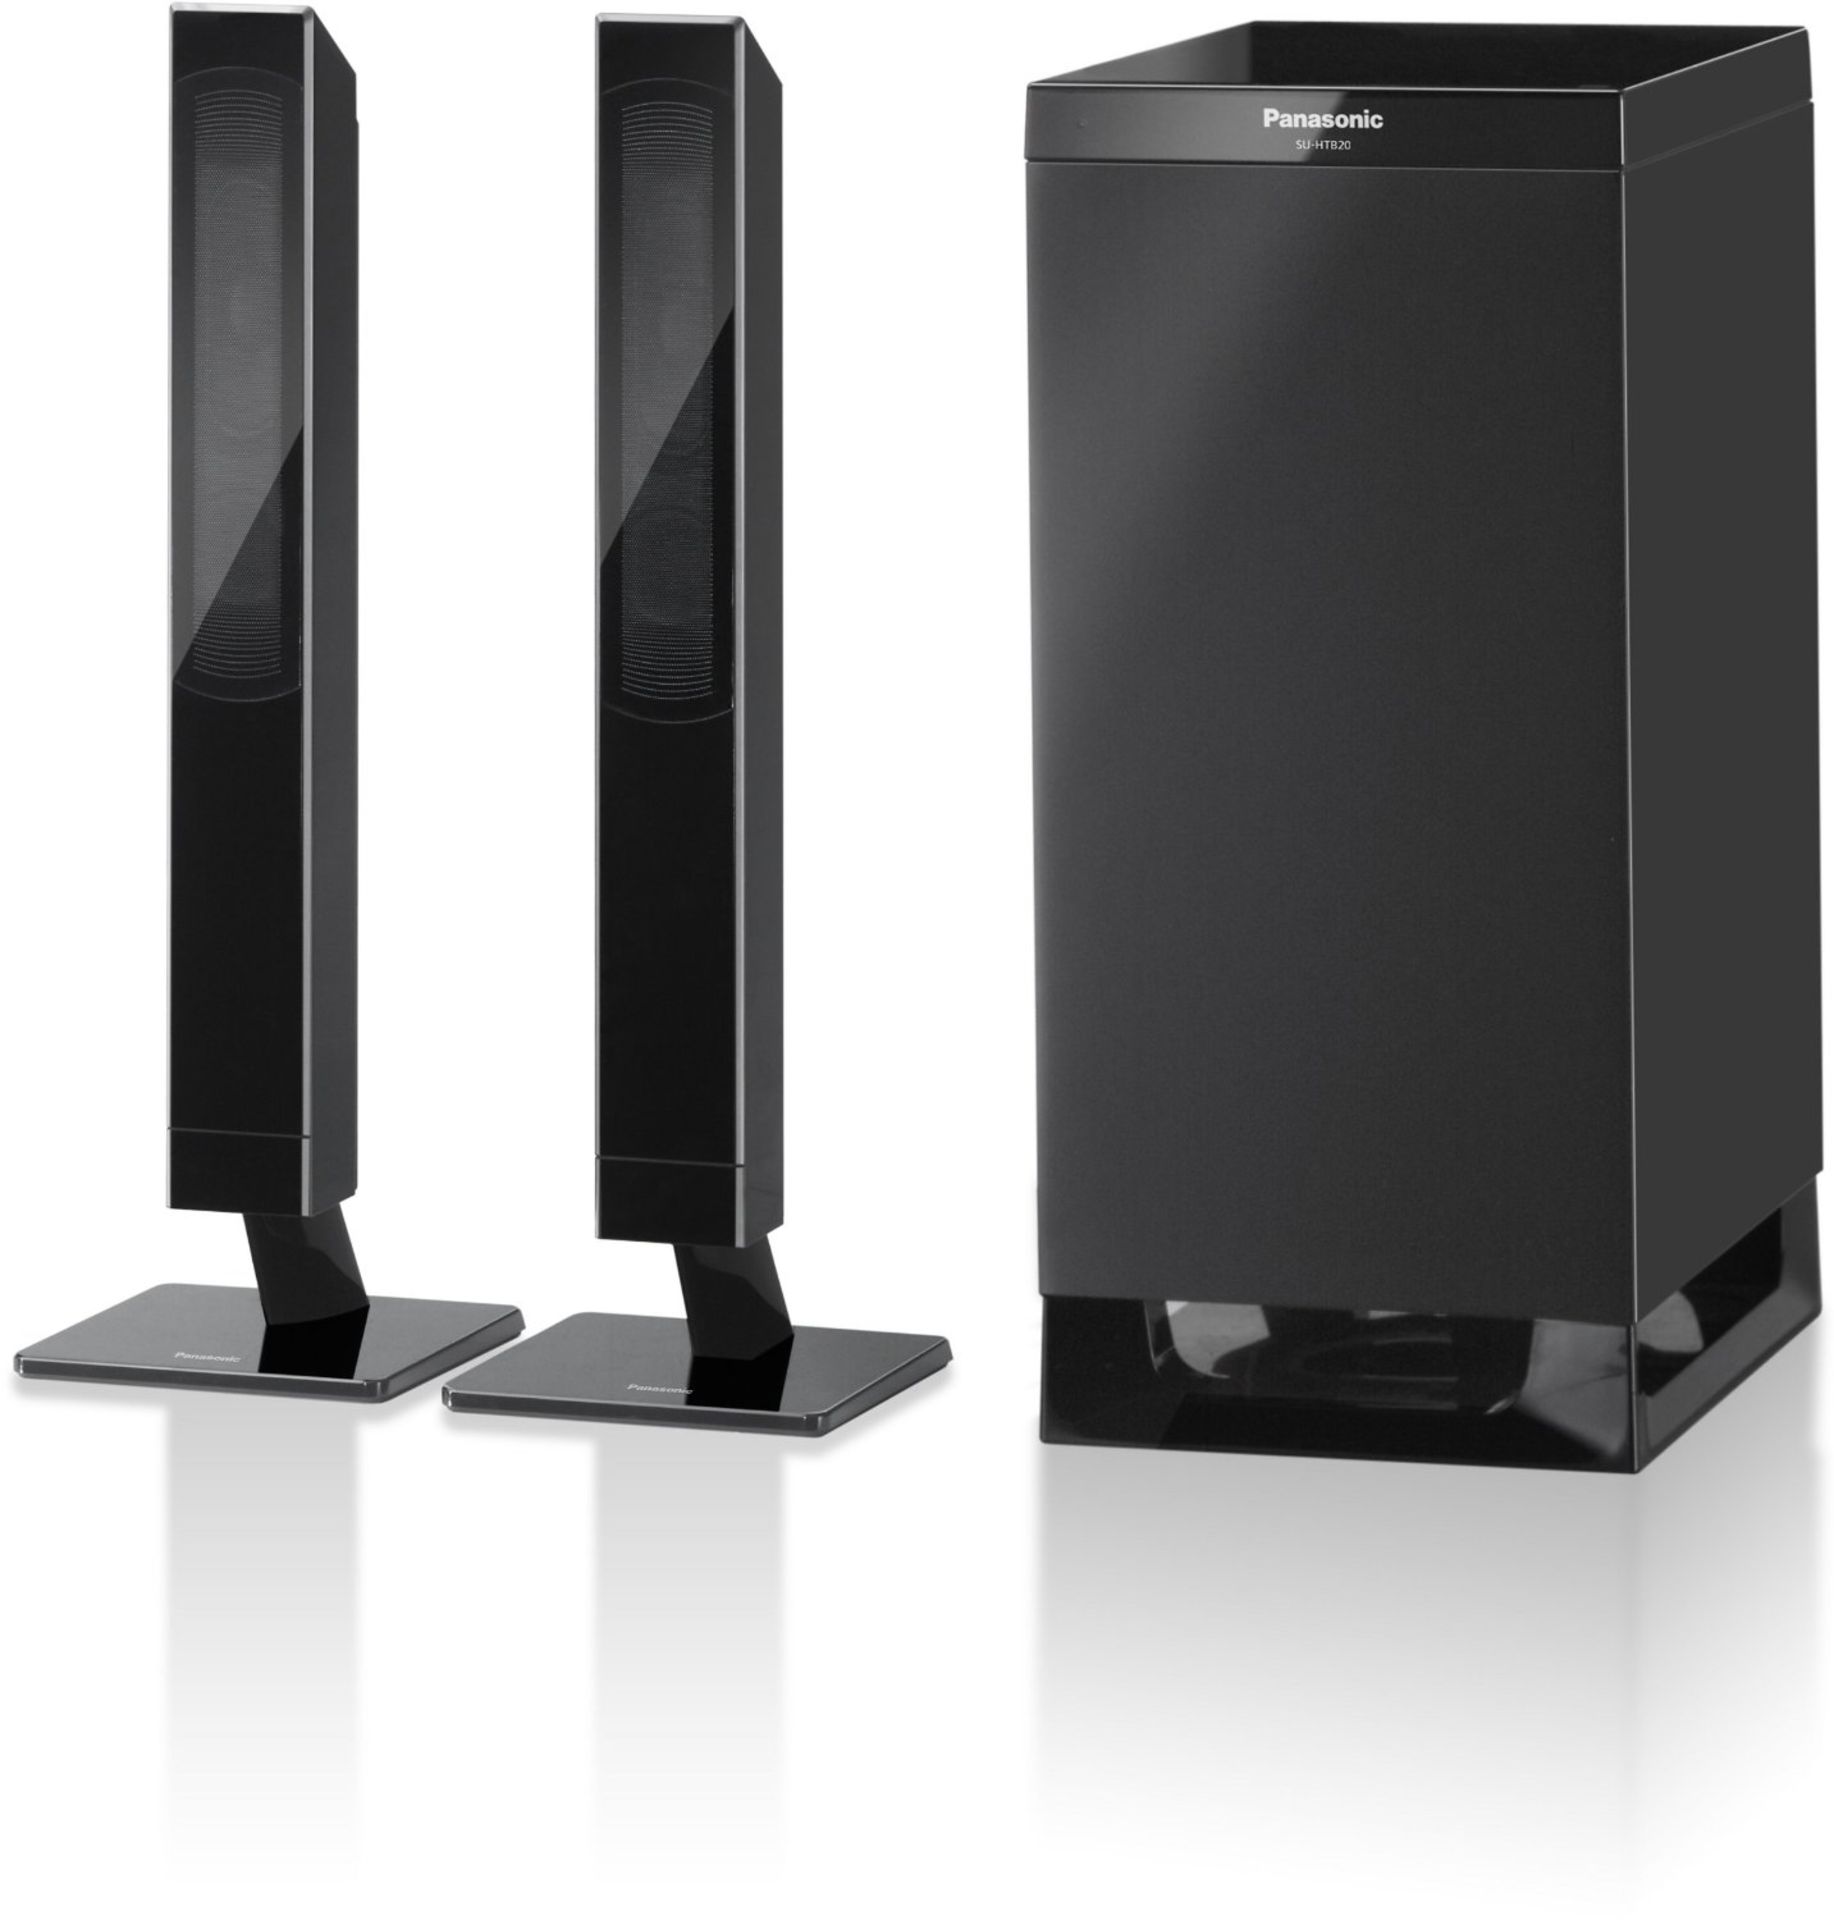 V Brand New Black Panasonic SC-HTB20 Home Theater Audio System